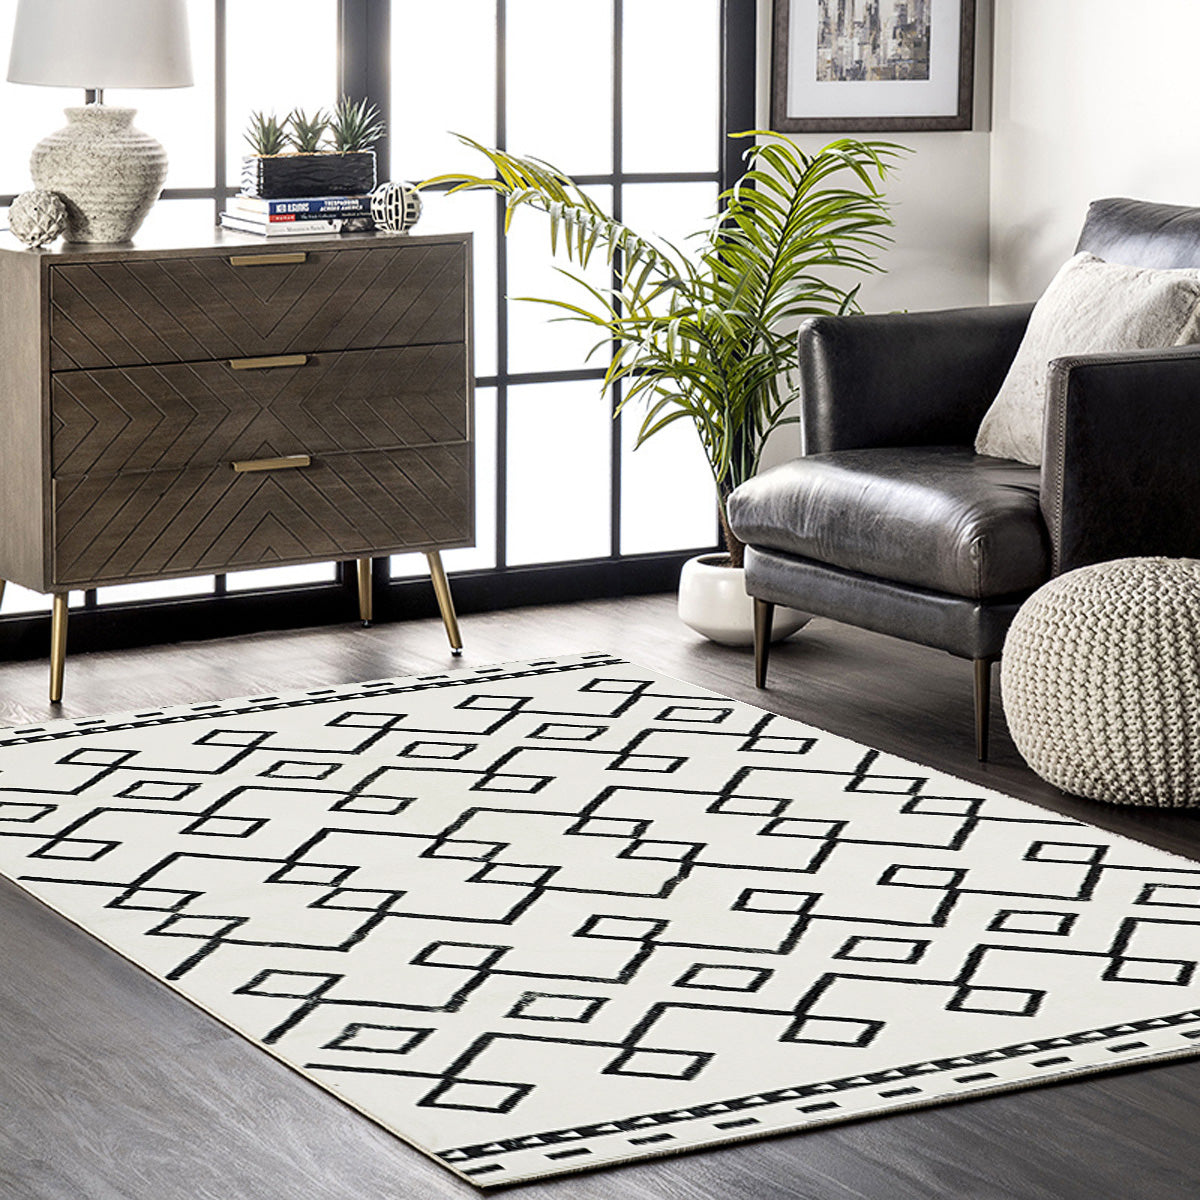 Snailhome Soft Area Rugs for Room, Non-Slip Carpet Floor Mat, Home